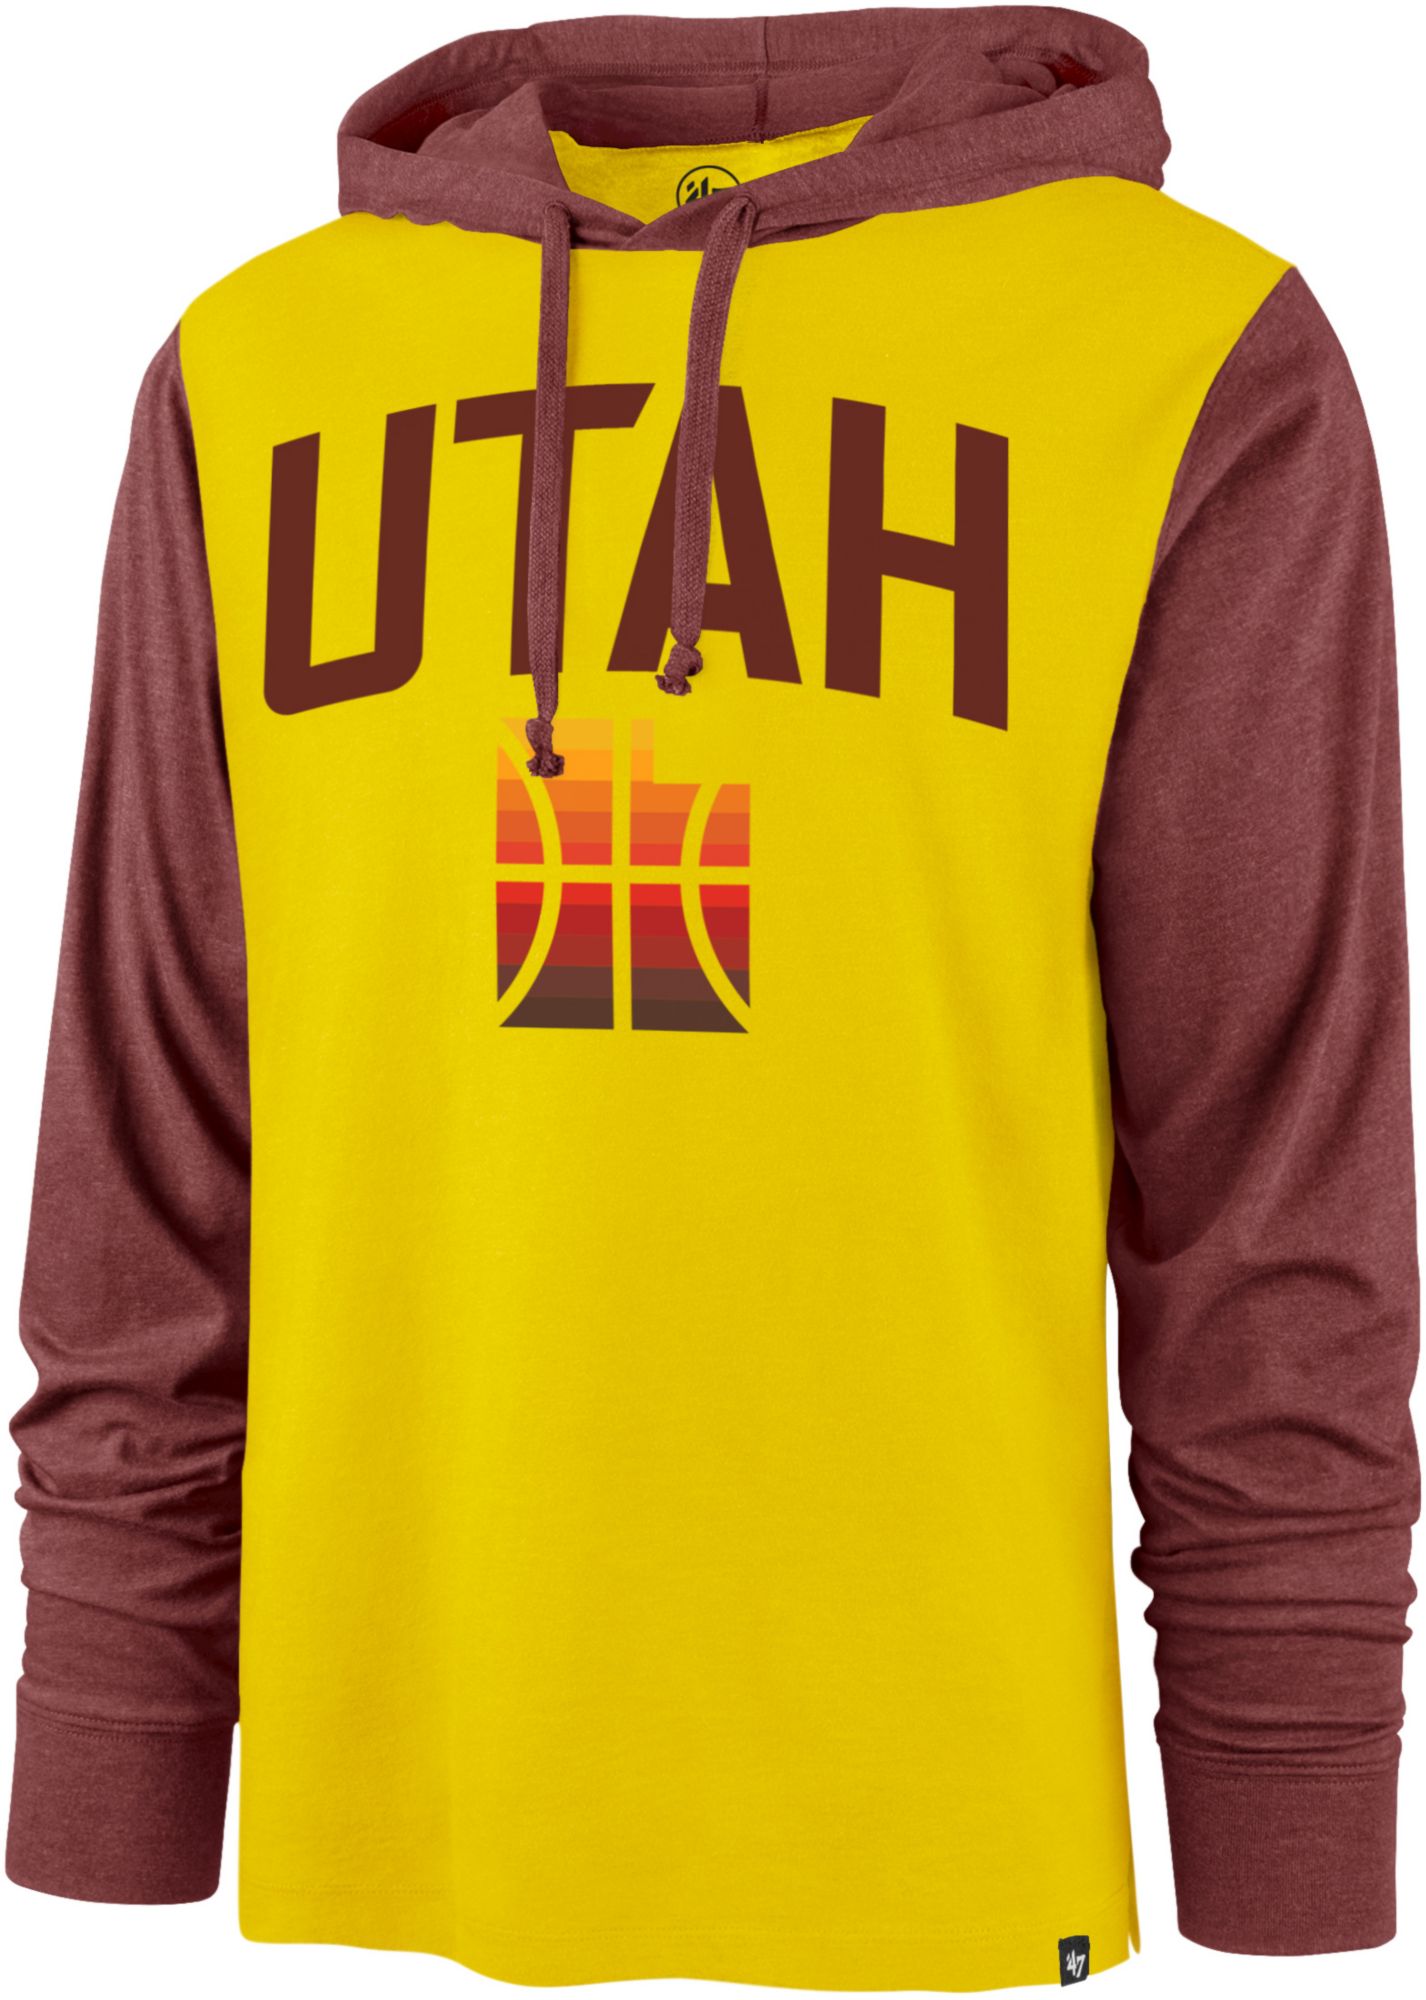 utah jazz city edition sweatshirt